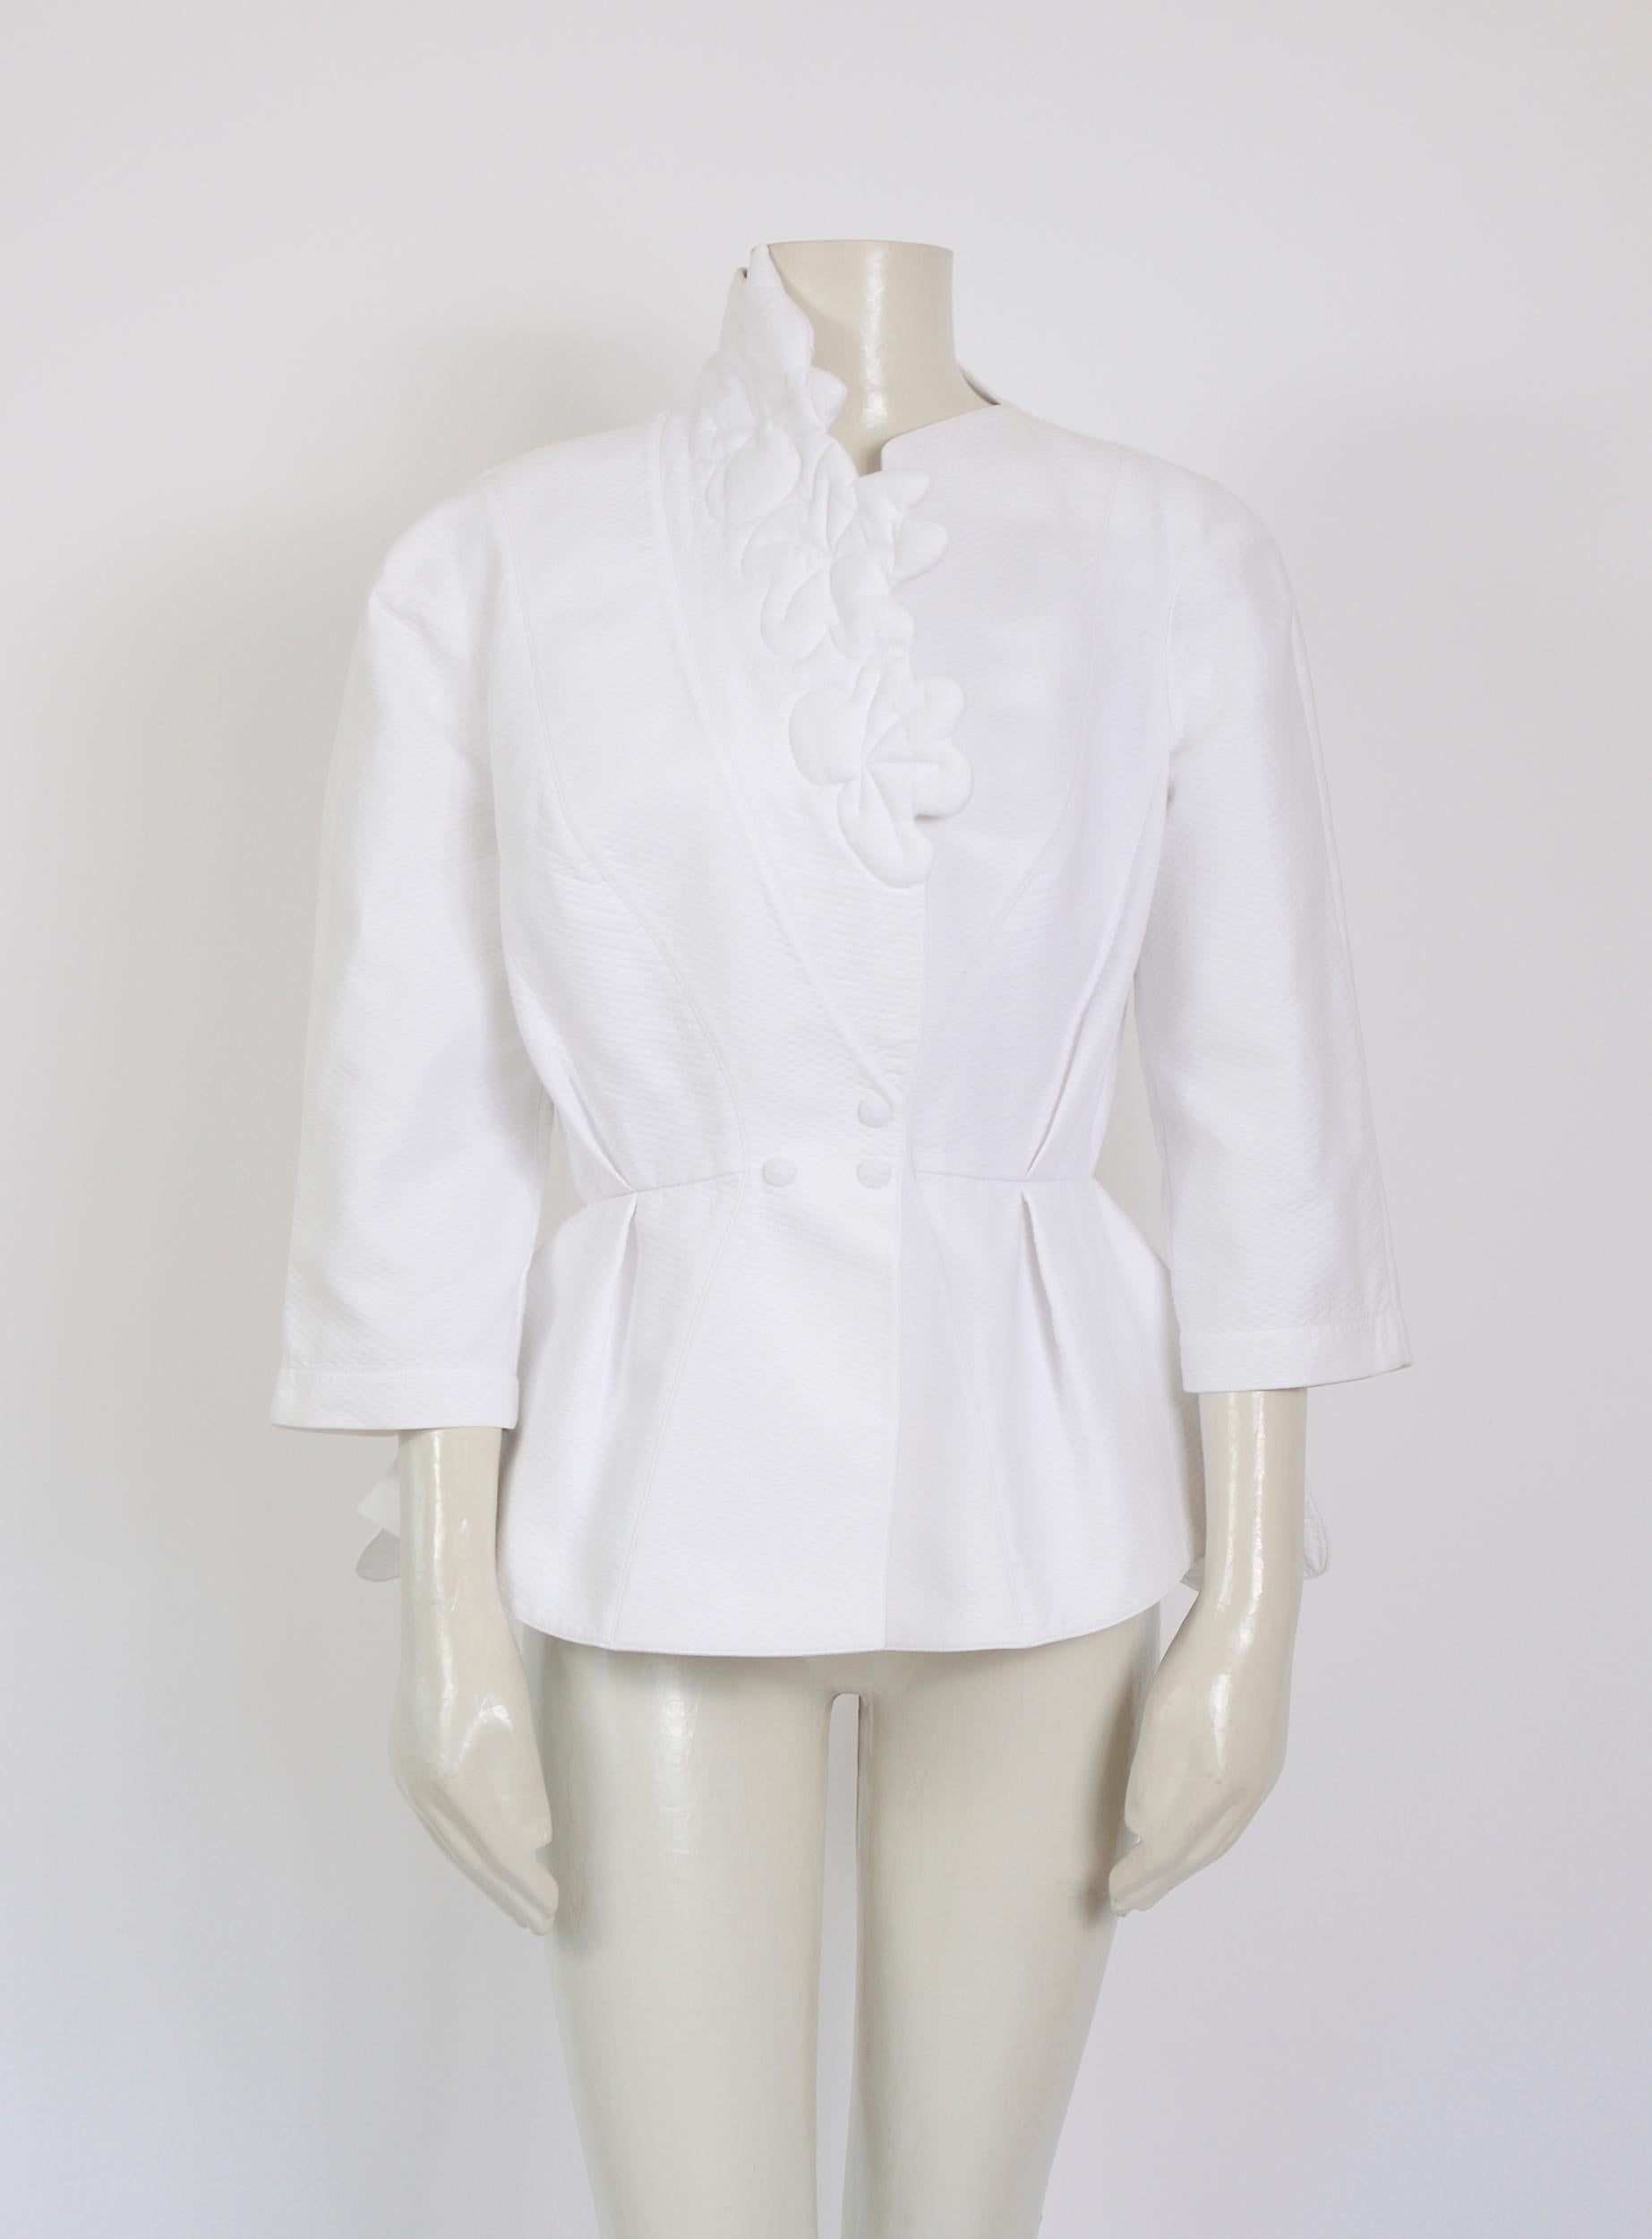 Gray Thierry Mugler vintage crispy white cotton pique 1980s jacket